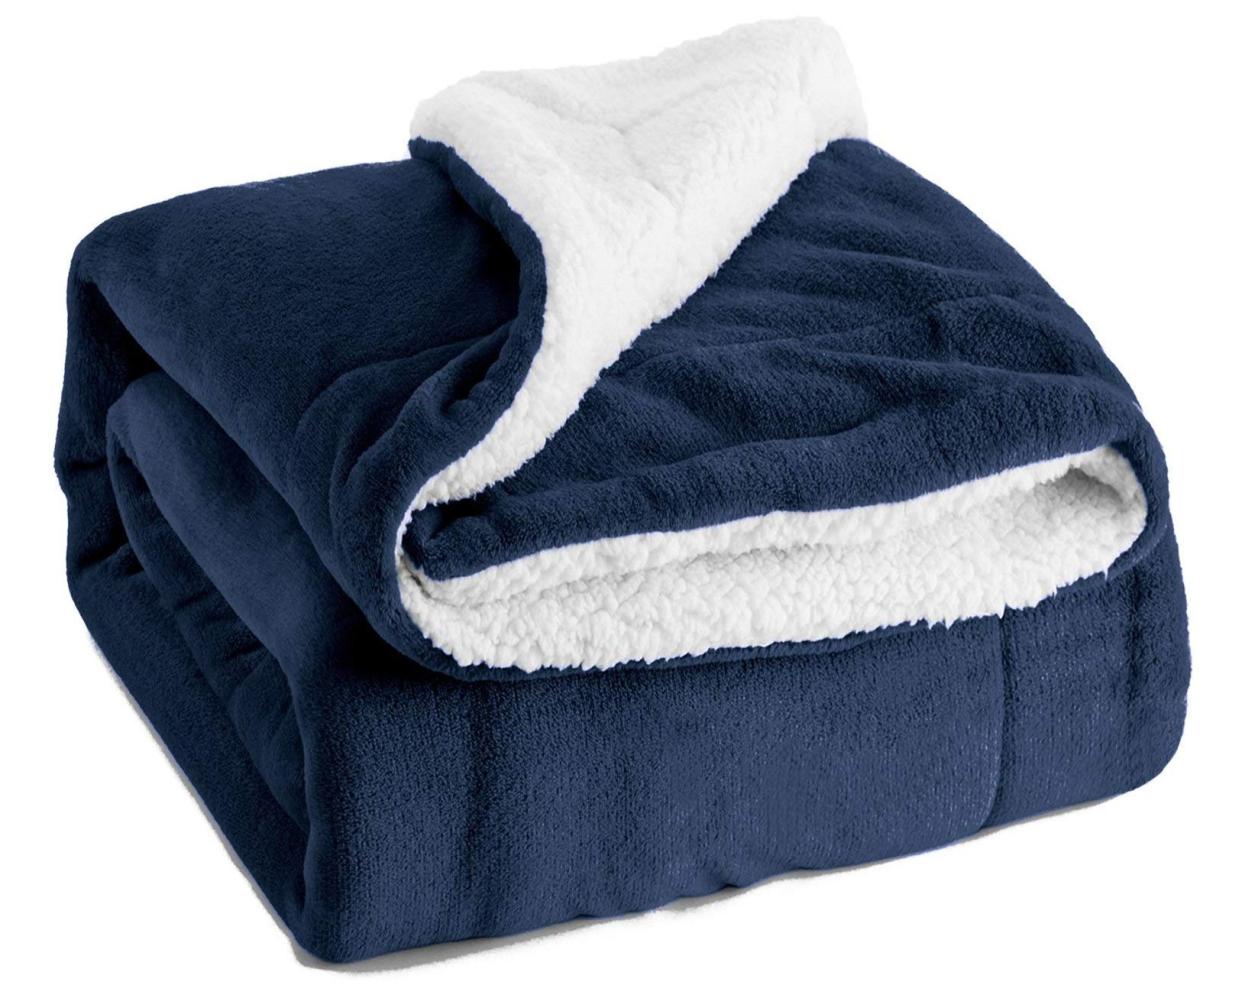 Bedsure Sherpa Blanket